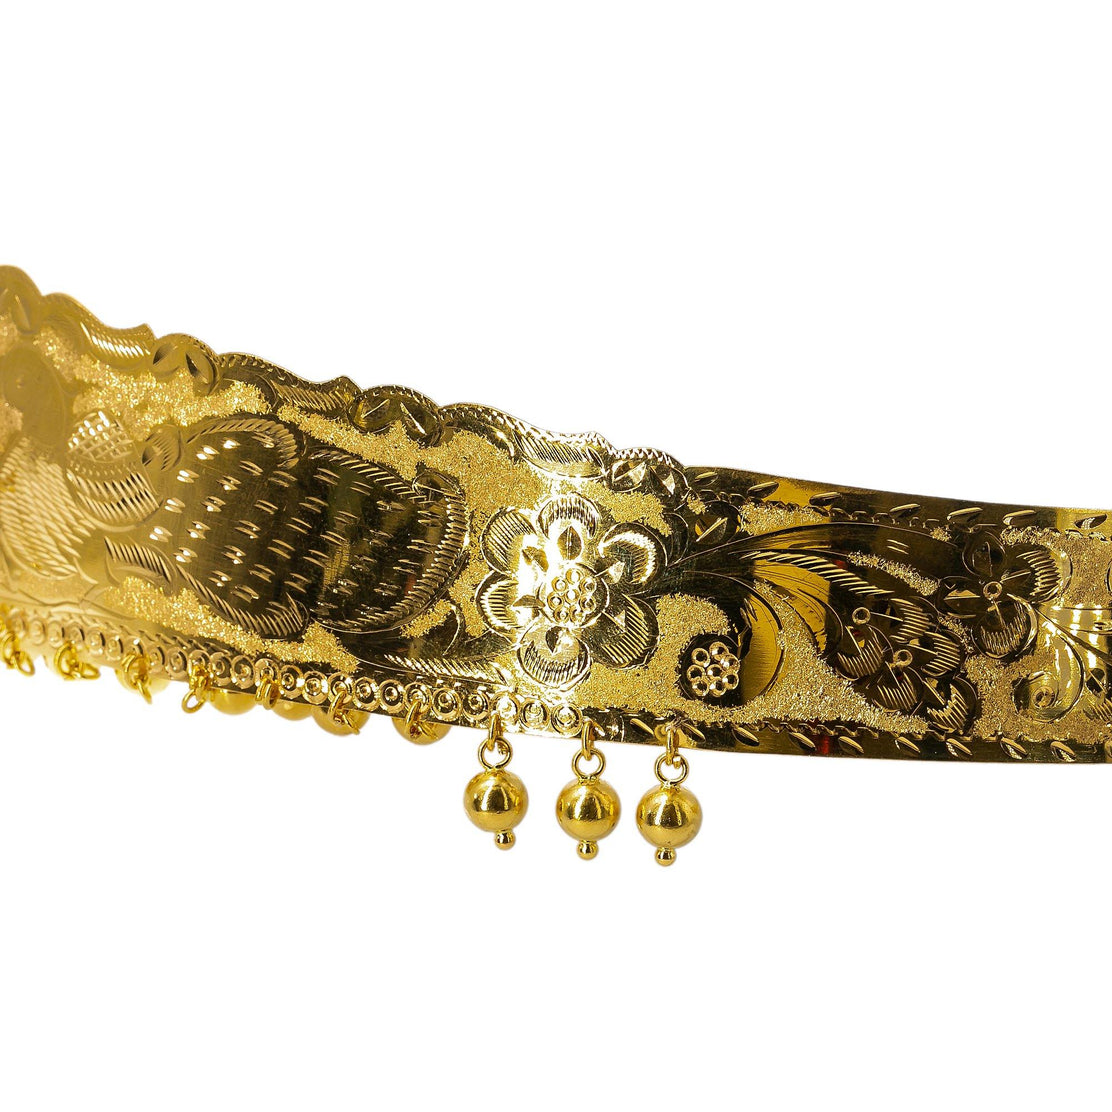 Antique 22K Laxmi Waist Belt - Shop For Stunning 22K Jewelry